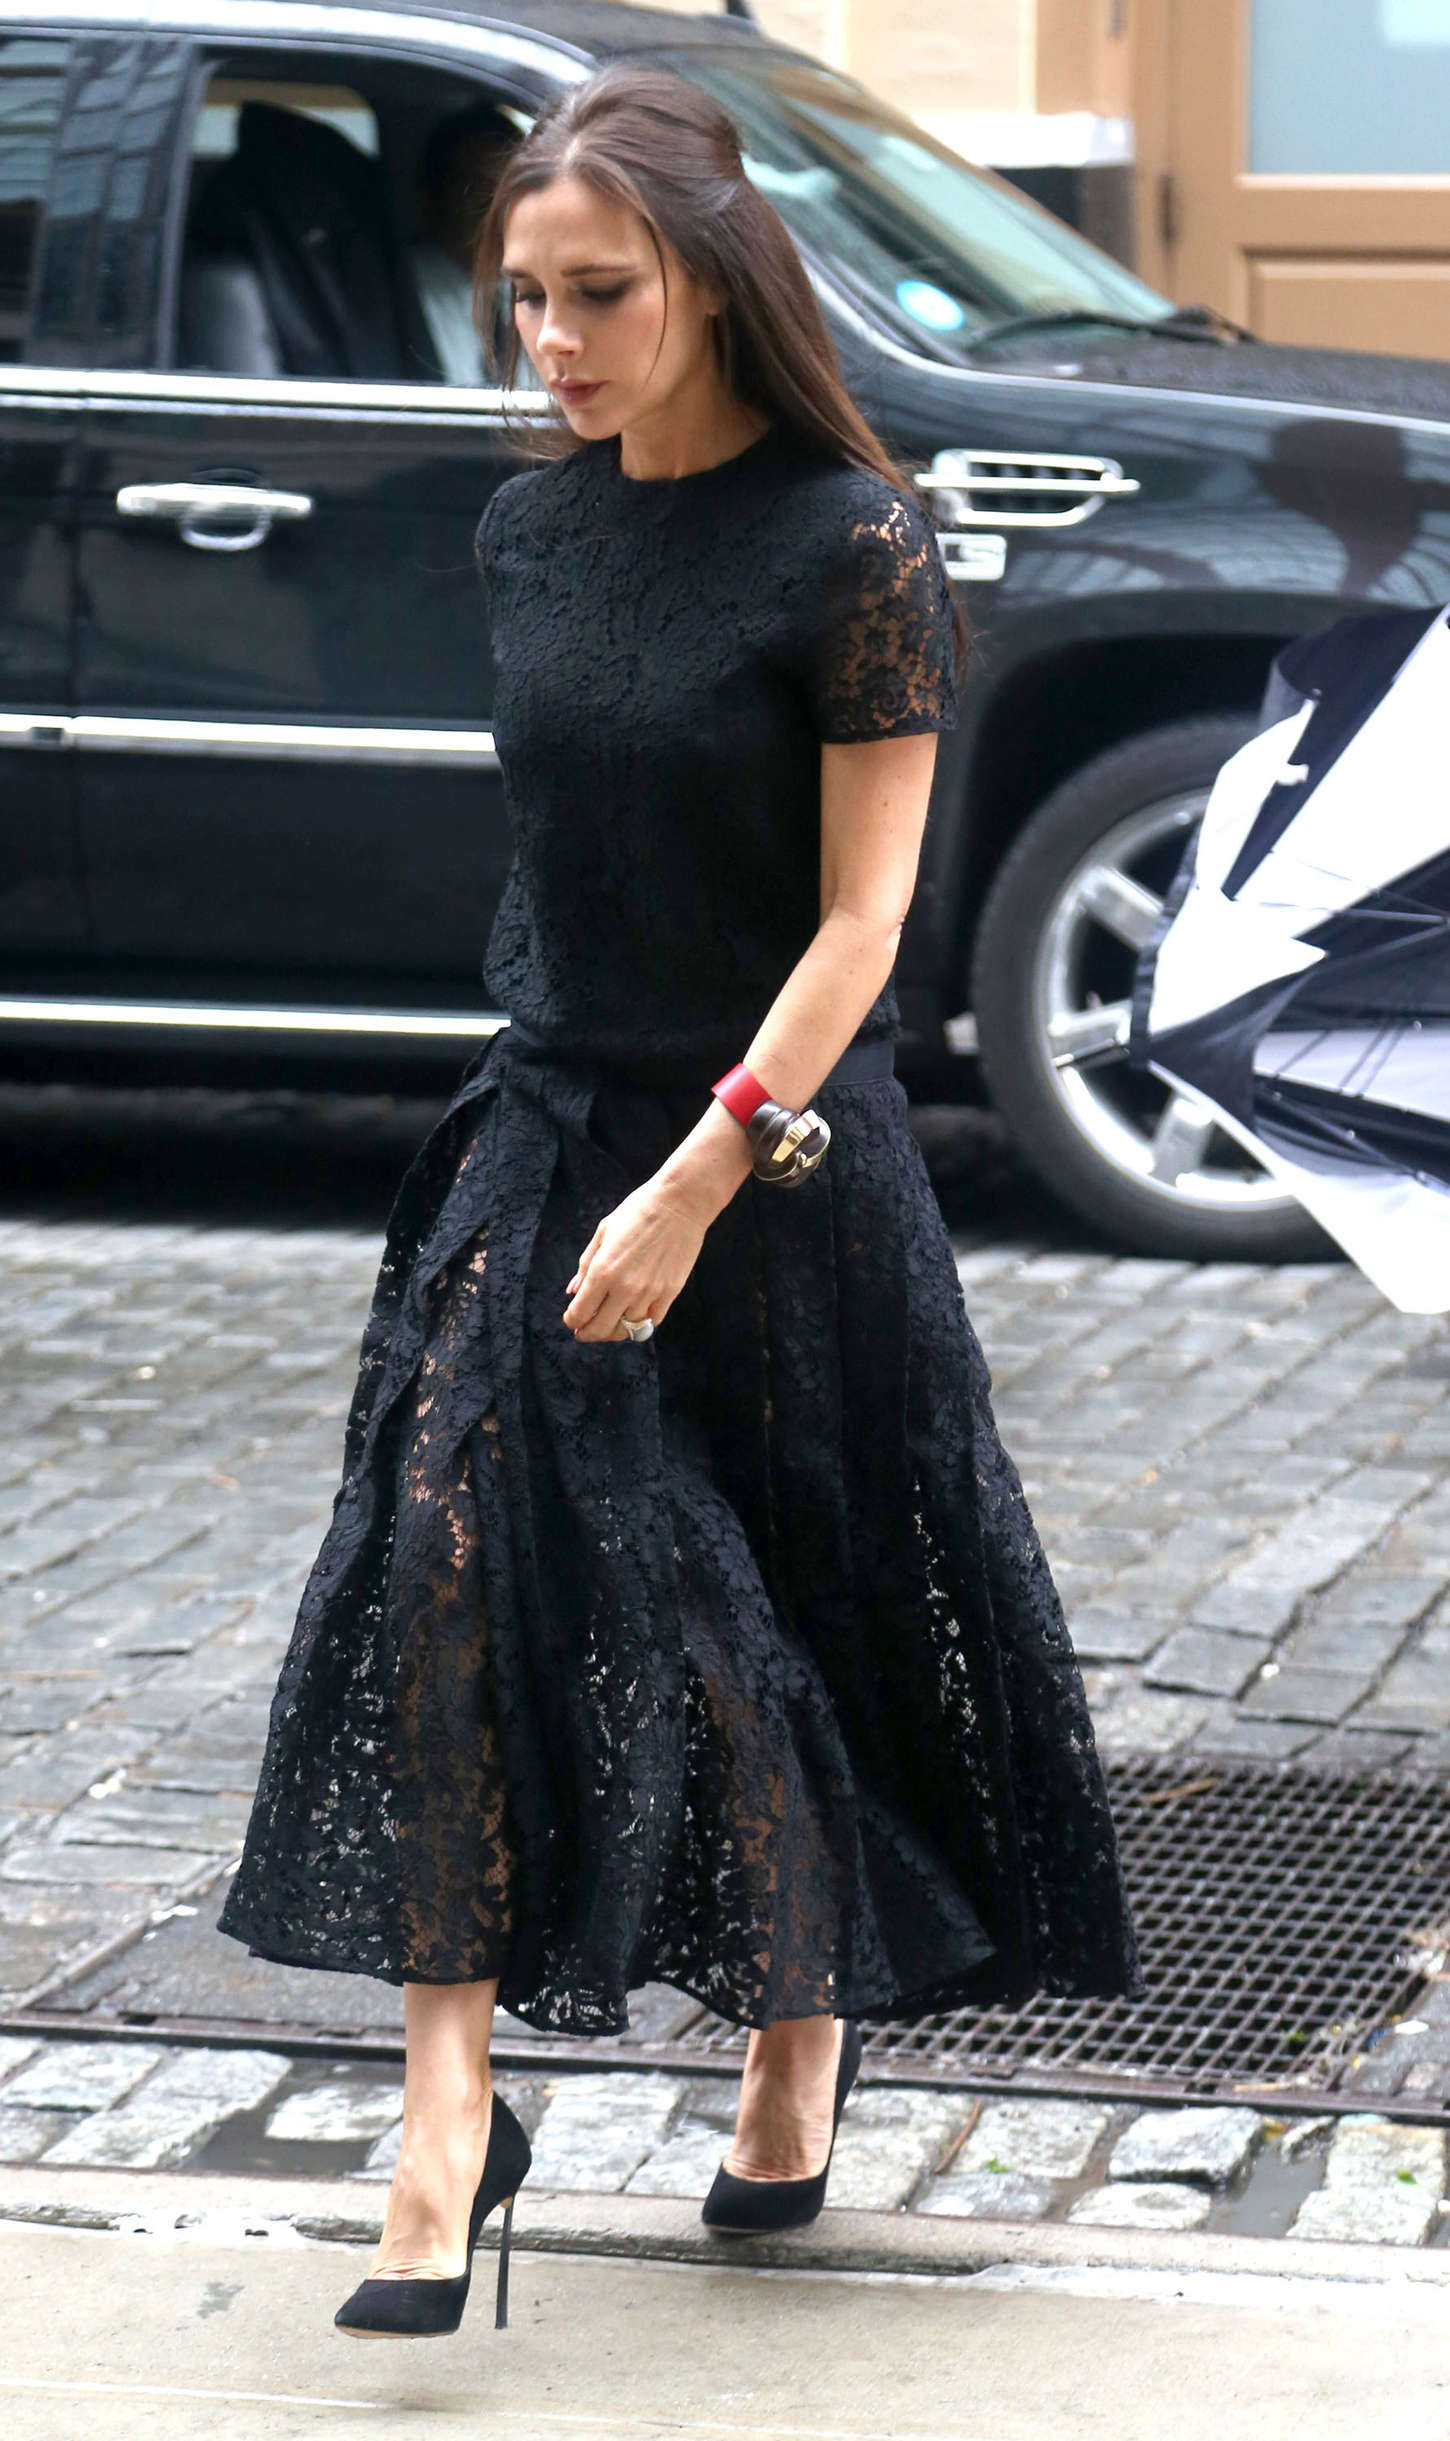 Victoria Beckham in Black Dress -02 | GotCeleb